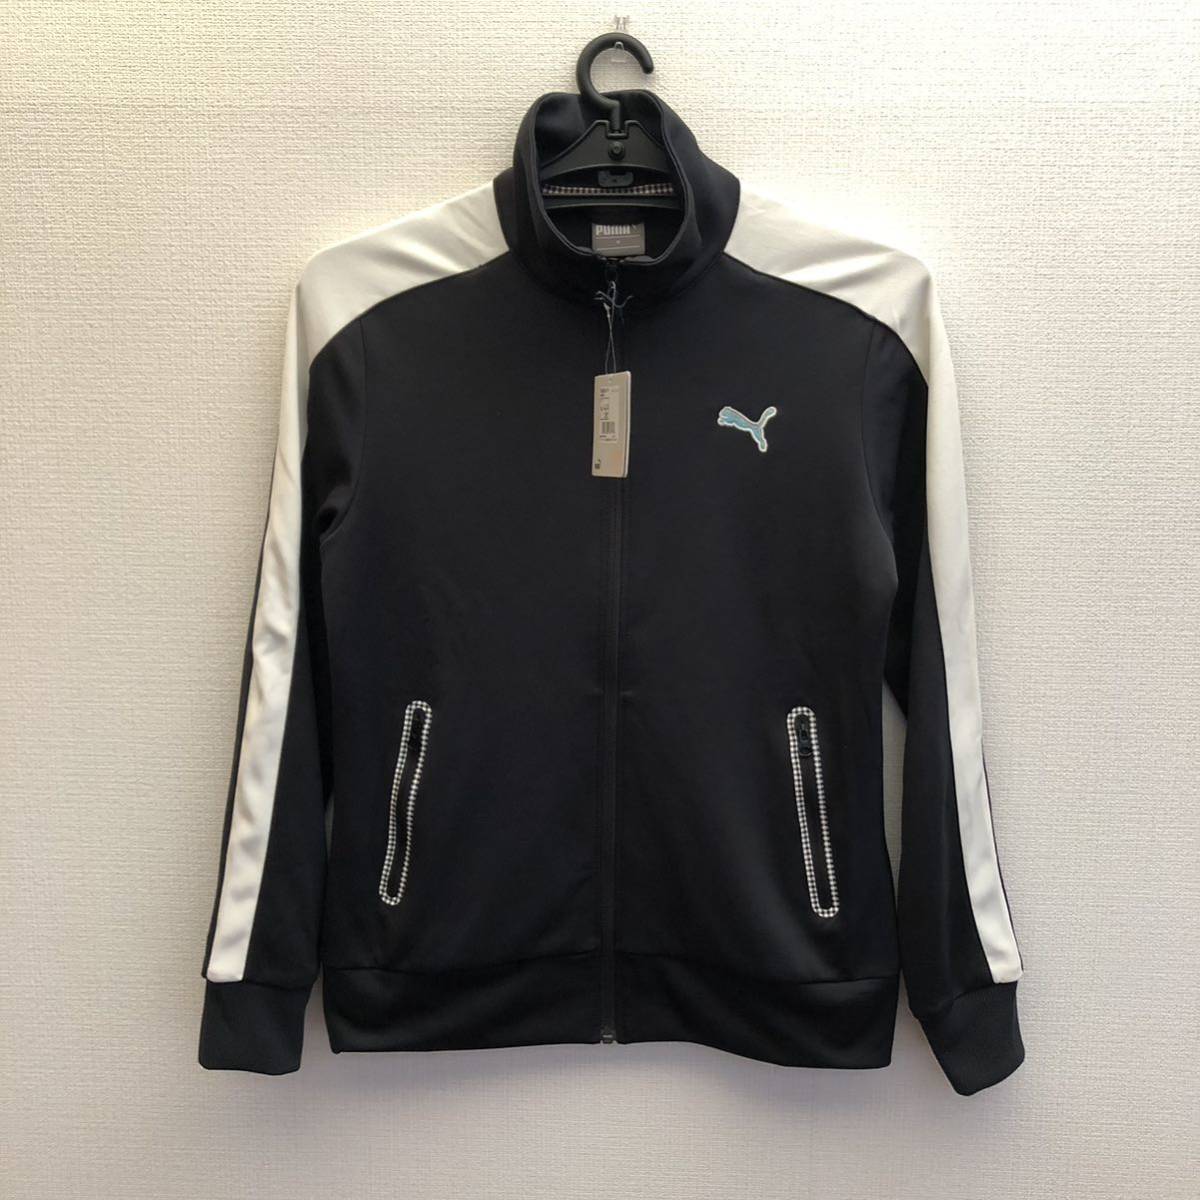 PUMA( Puma ) DRY CELL женский спортивная куртка * справочная цена :8.690 иен *920200 01* женский M размер (230220)